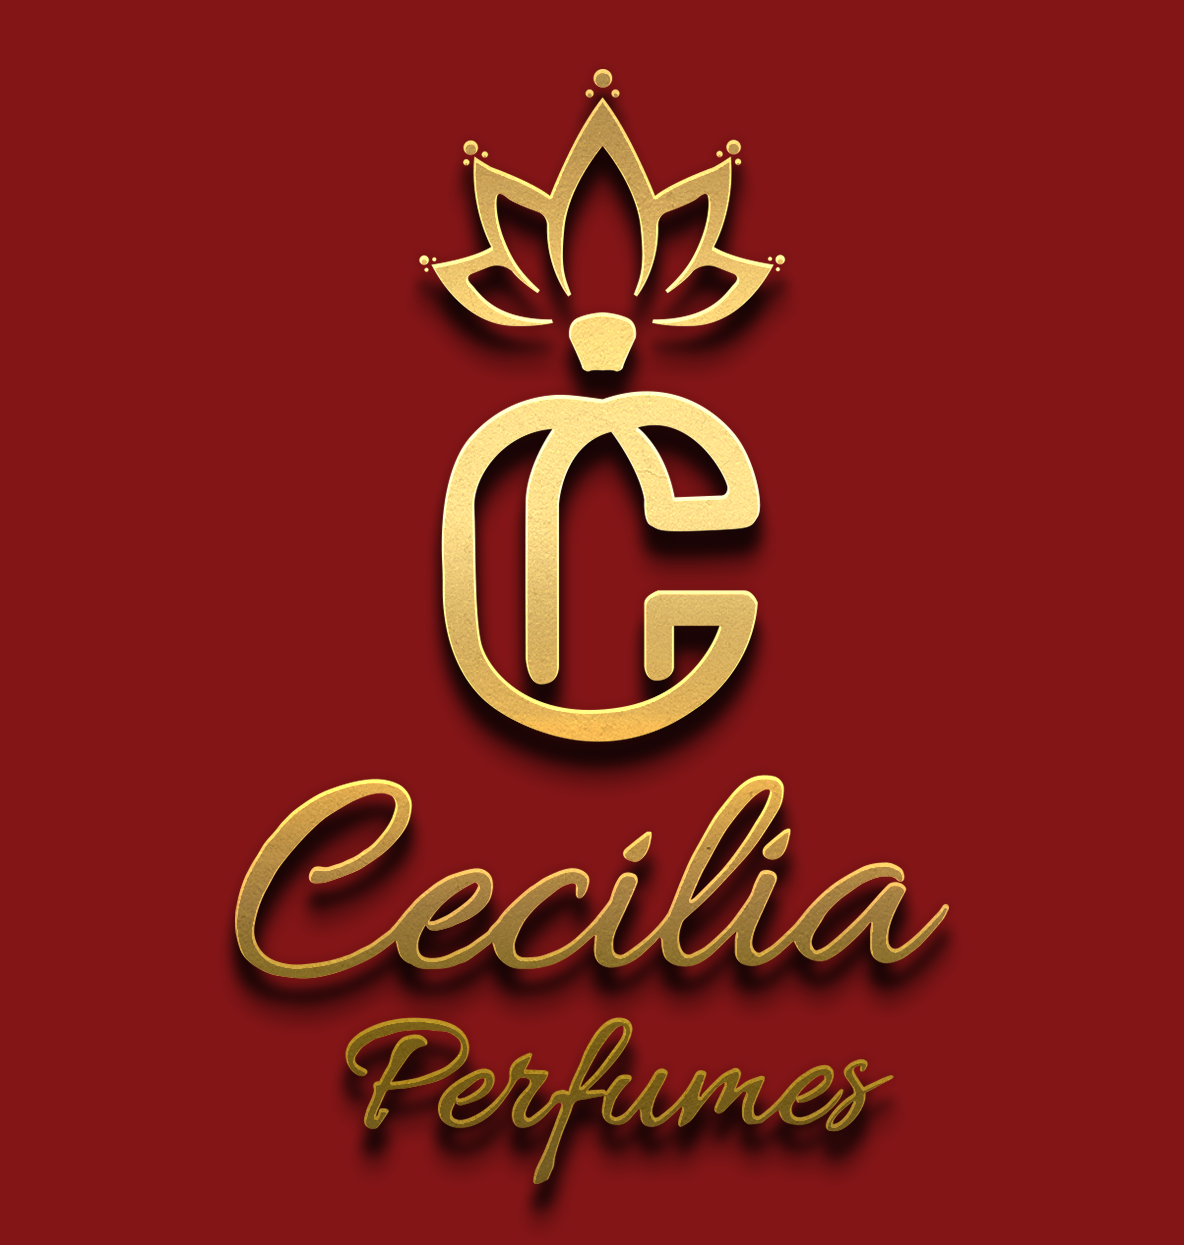 Cecilia Perfumes